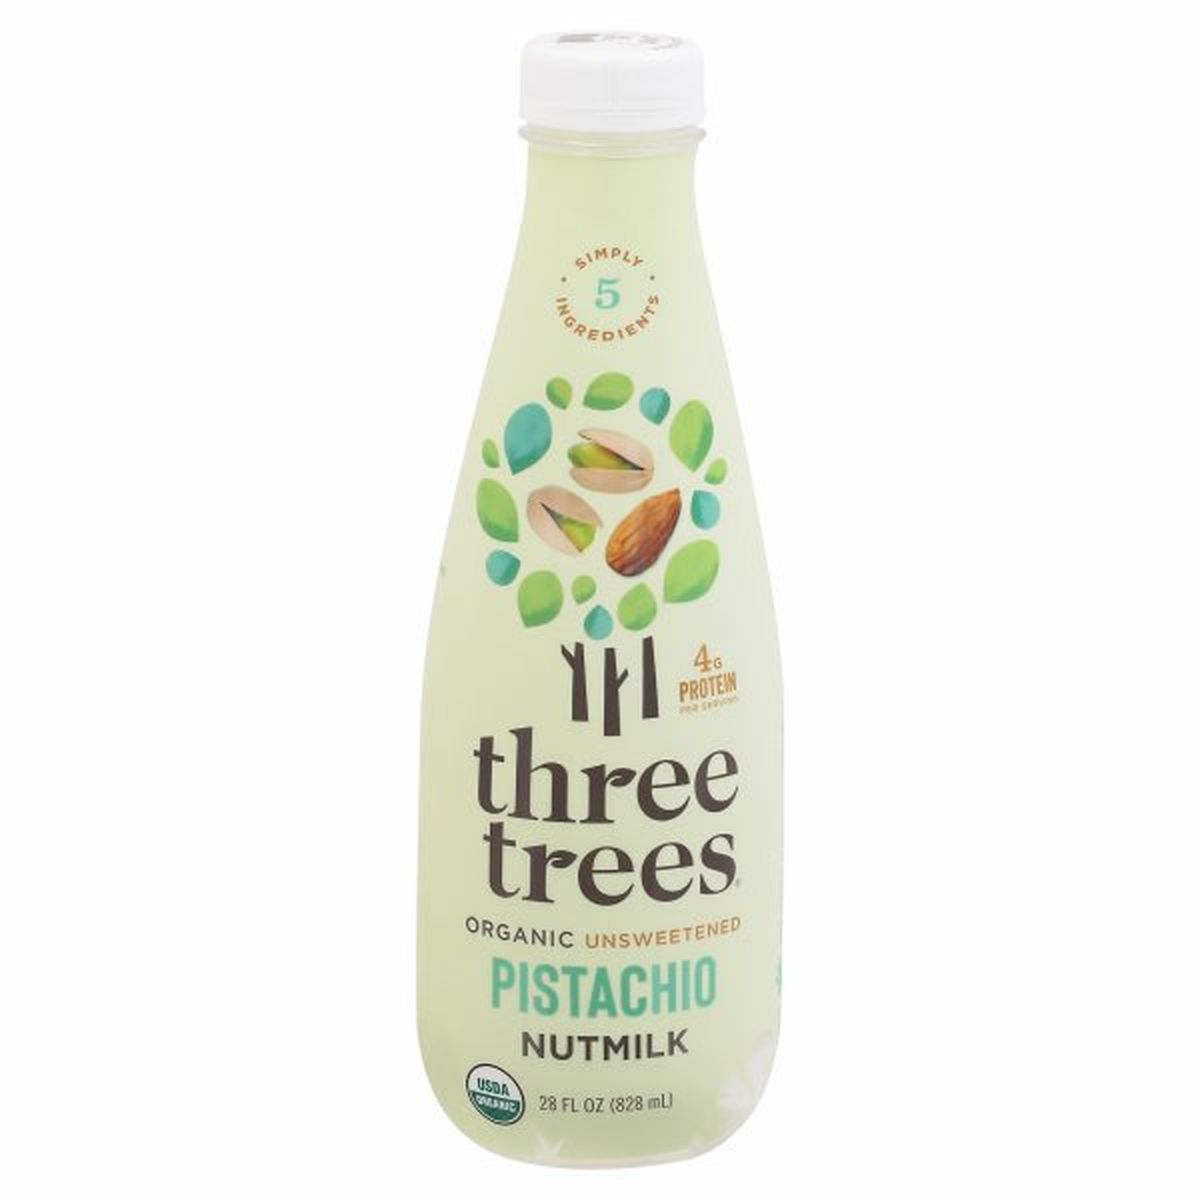 Calories in Three Trees Nutmilk, Organic, Pistachio, Unsweetened